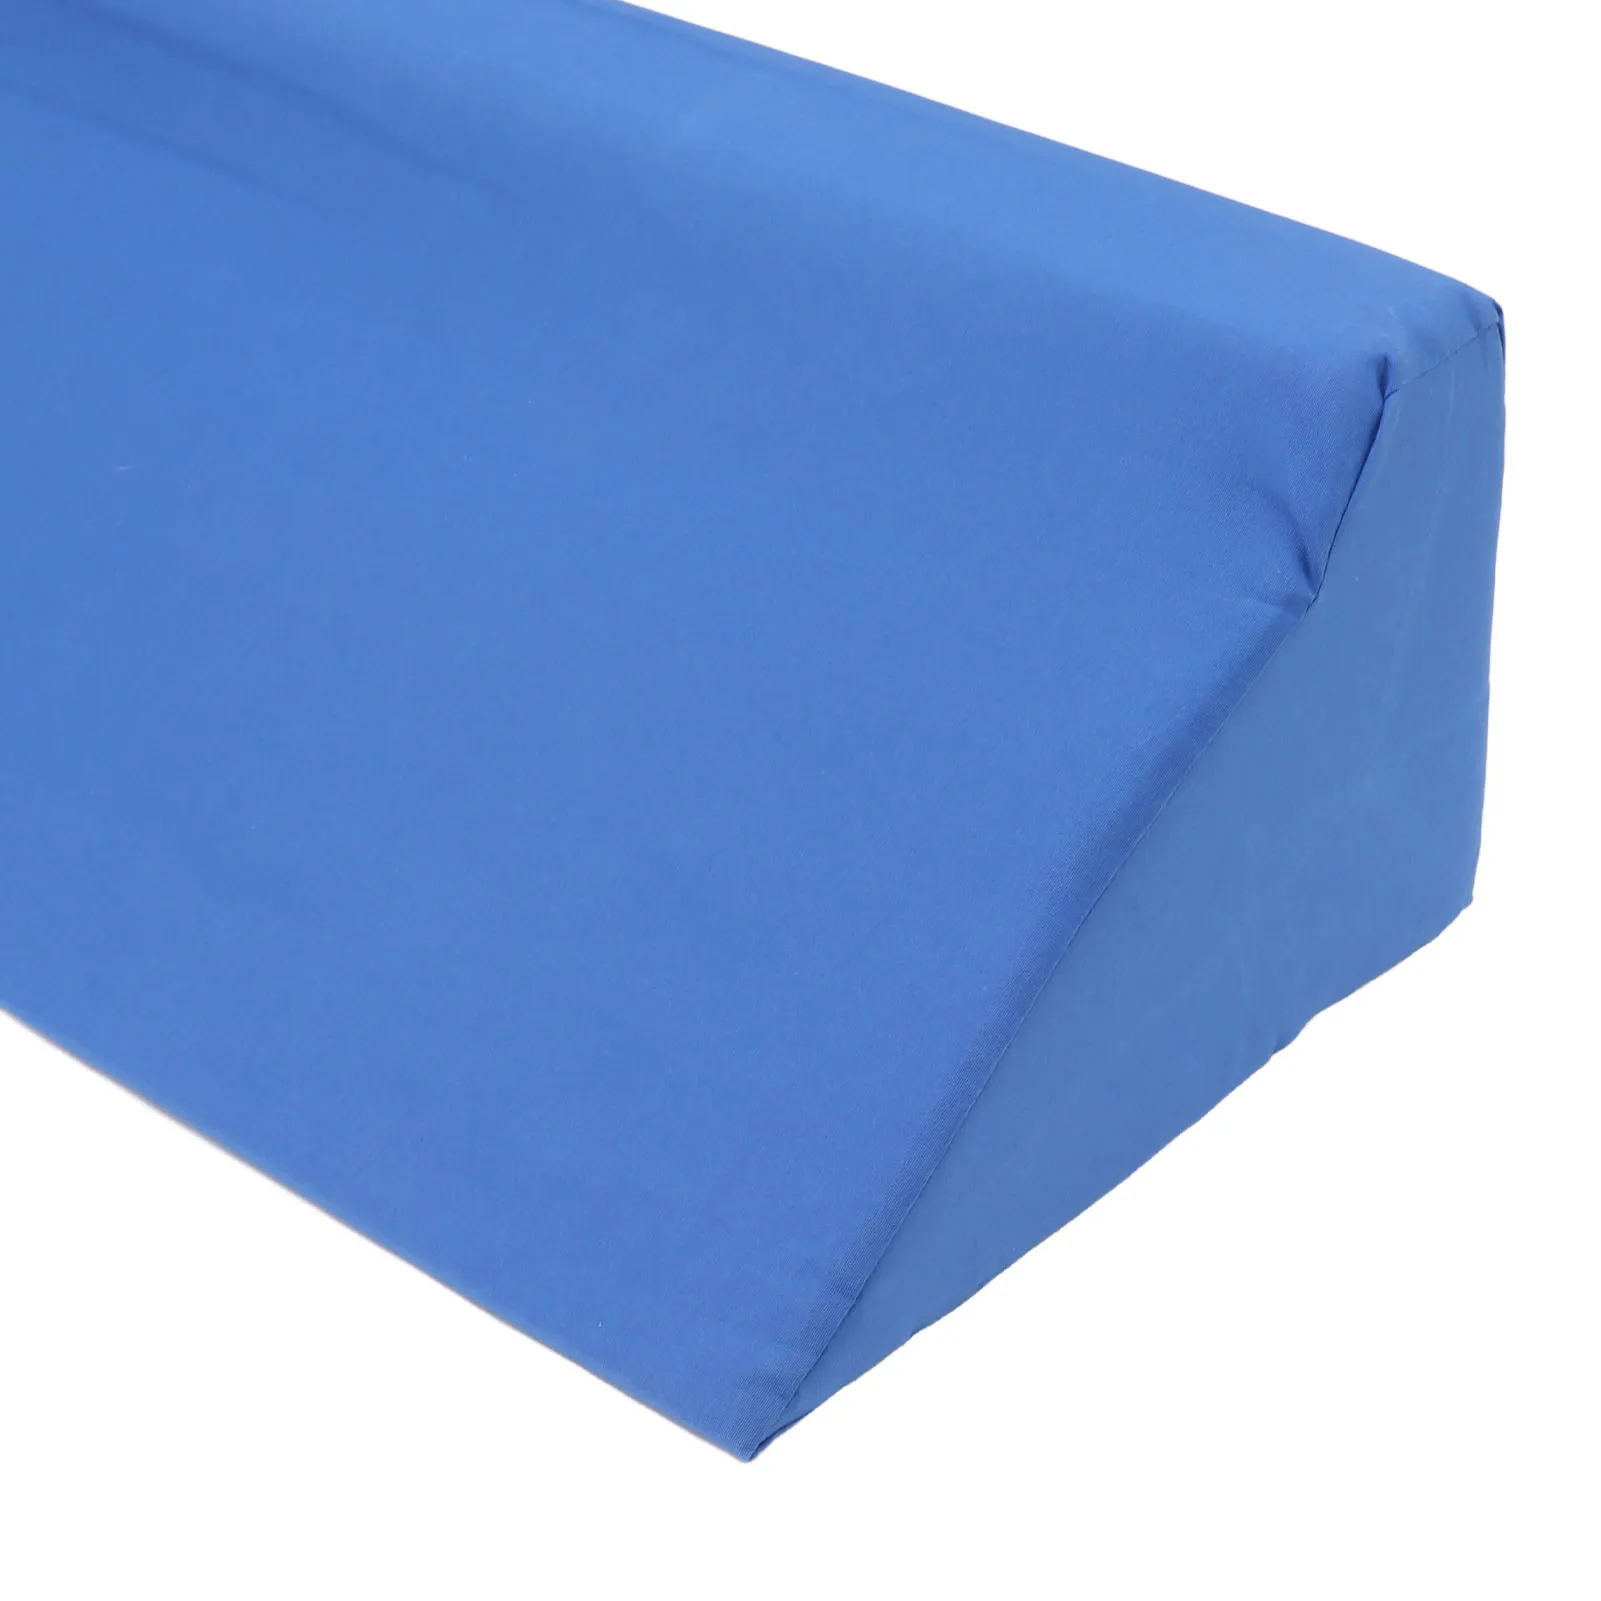 https://ae01.alicdn.com/kf/S3fc0de2fc5eb4125abac57d26102dcd45/Body-Side-Wedge-Pillow-with-Zipper-Blue-Cotton-Incline-Side-Wedge-Pillow-Personalized-Blue-for-Adults.jpg